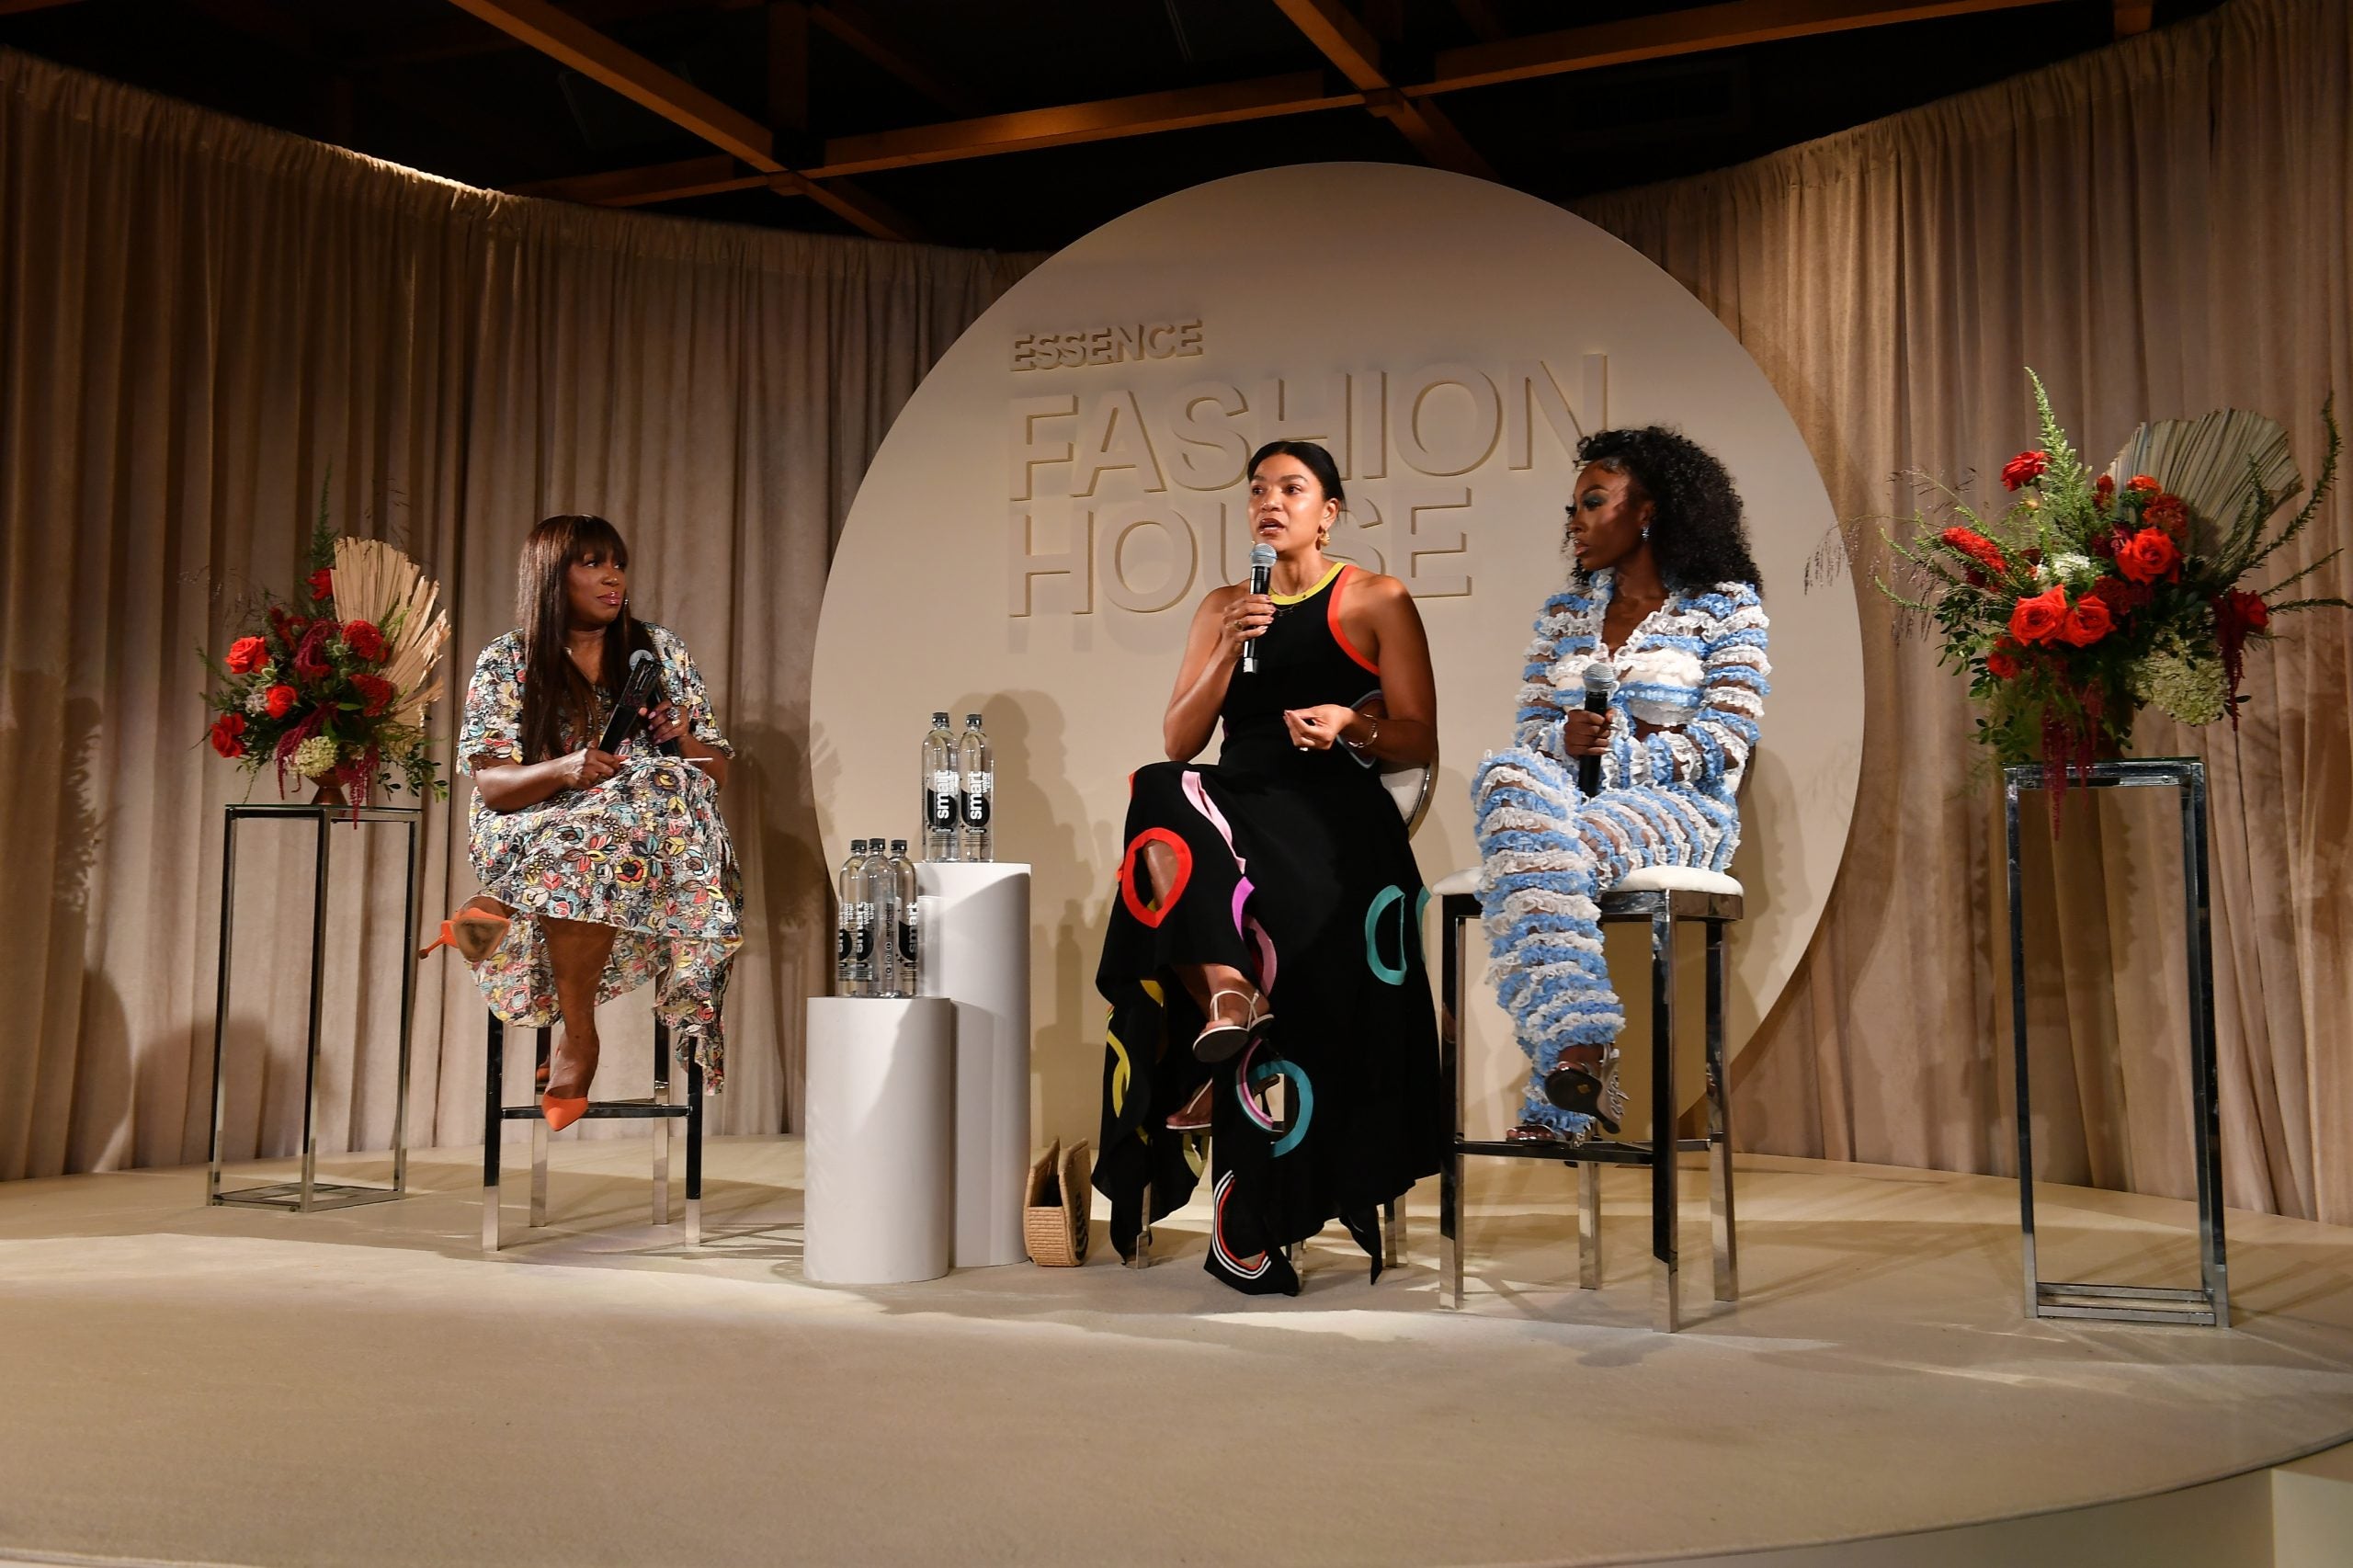 ESSENCE Fashion House: Bringing Black Designers To The Forefront Of Luxury